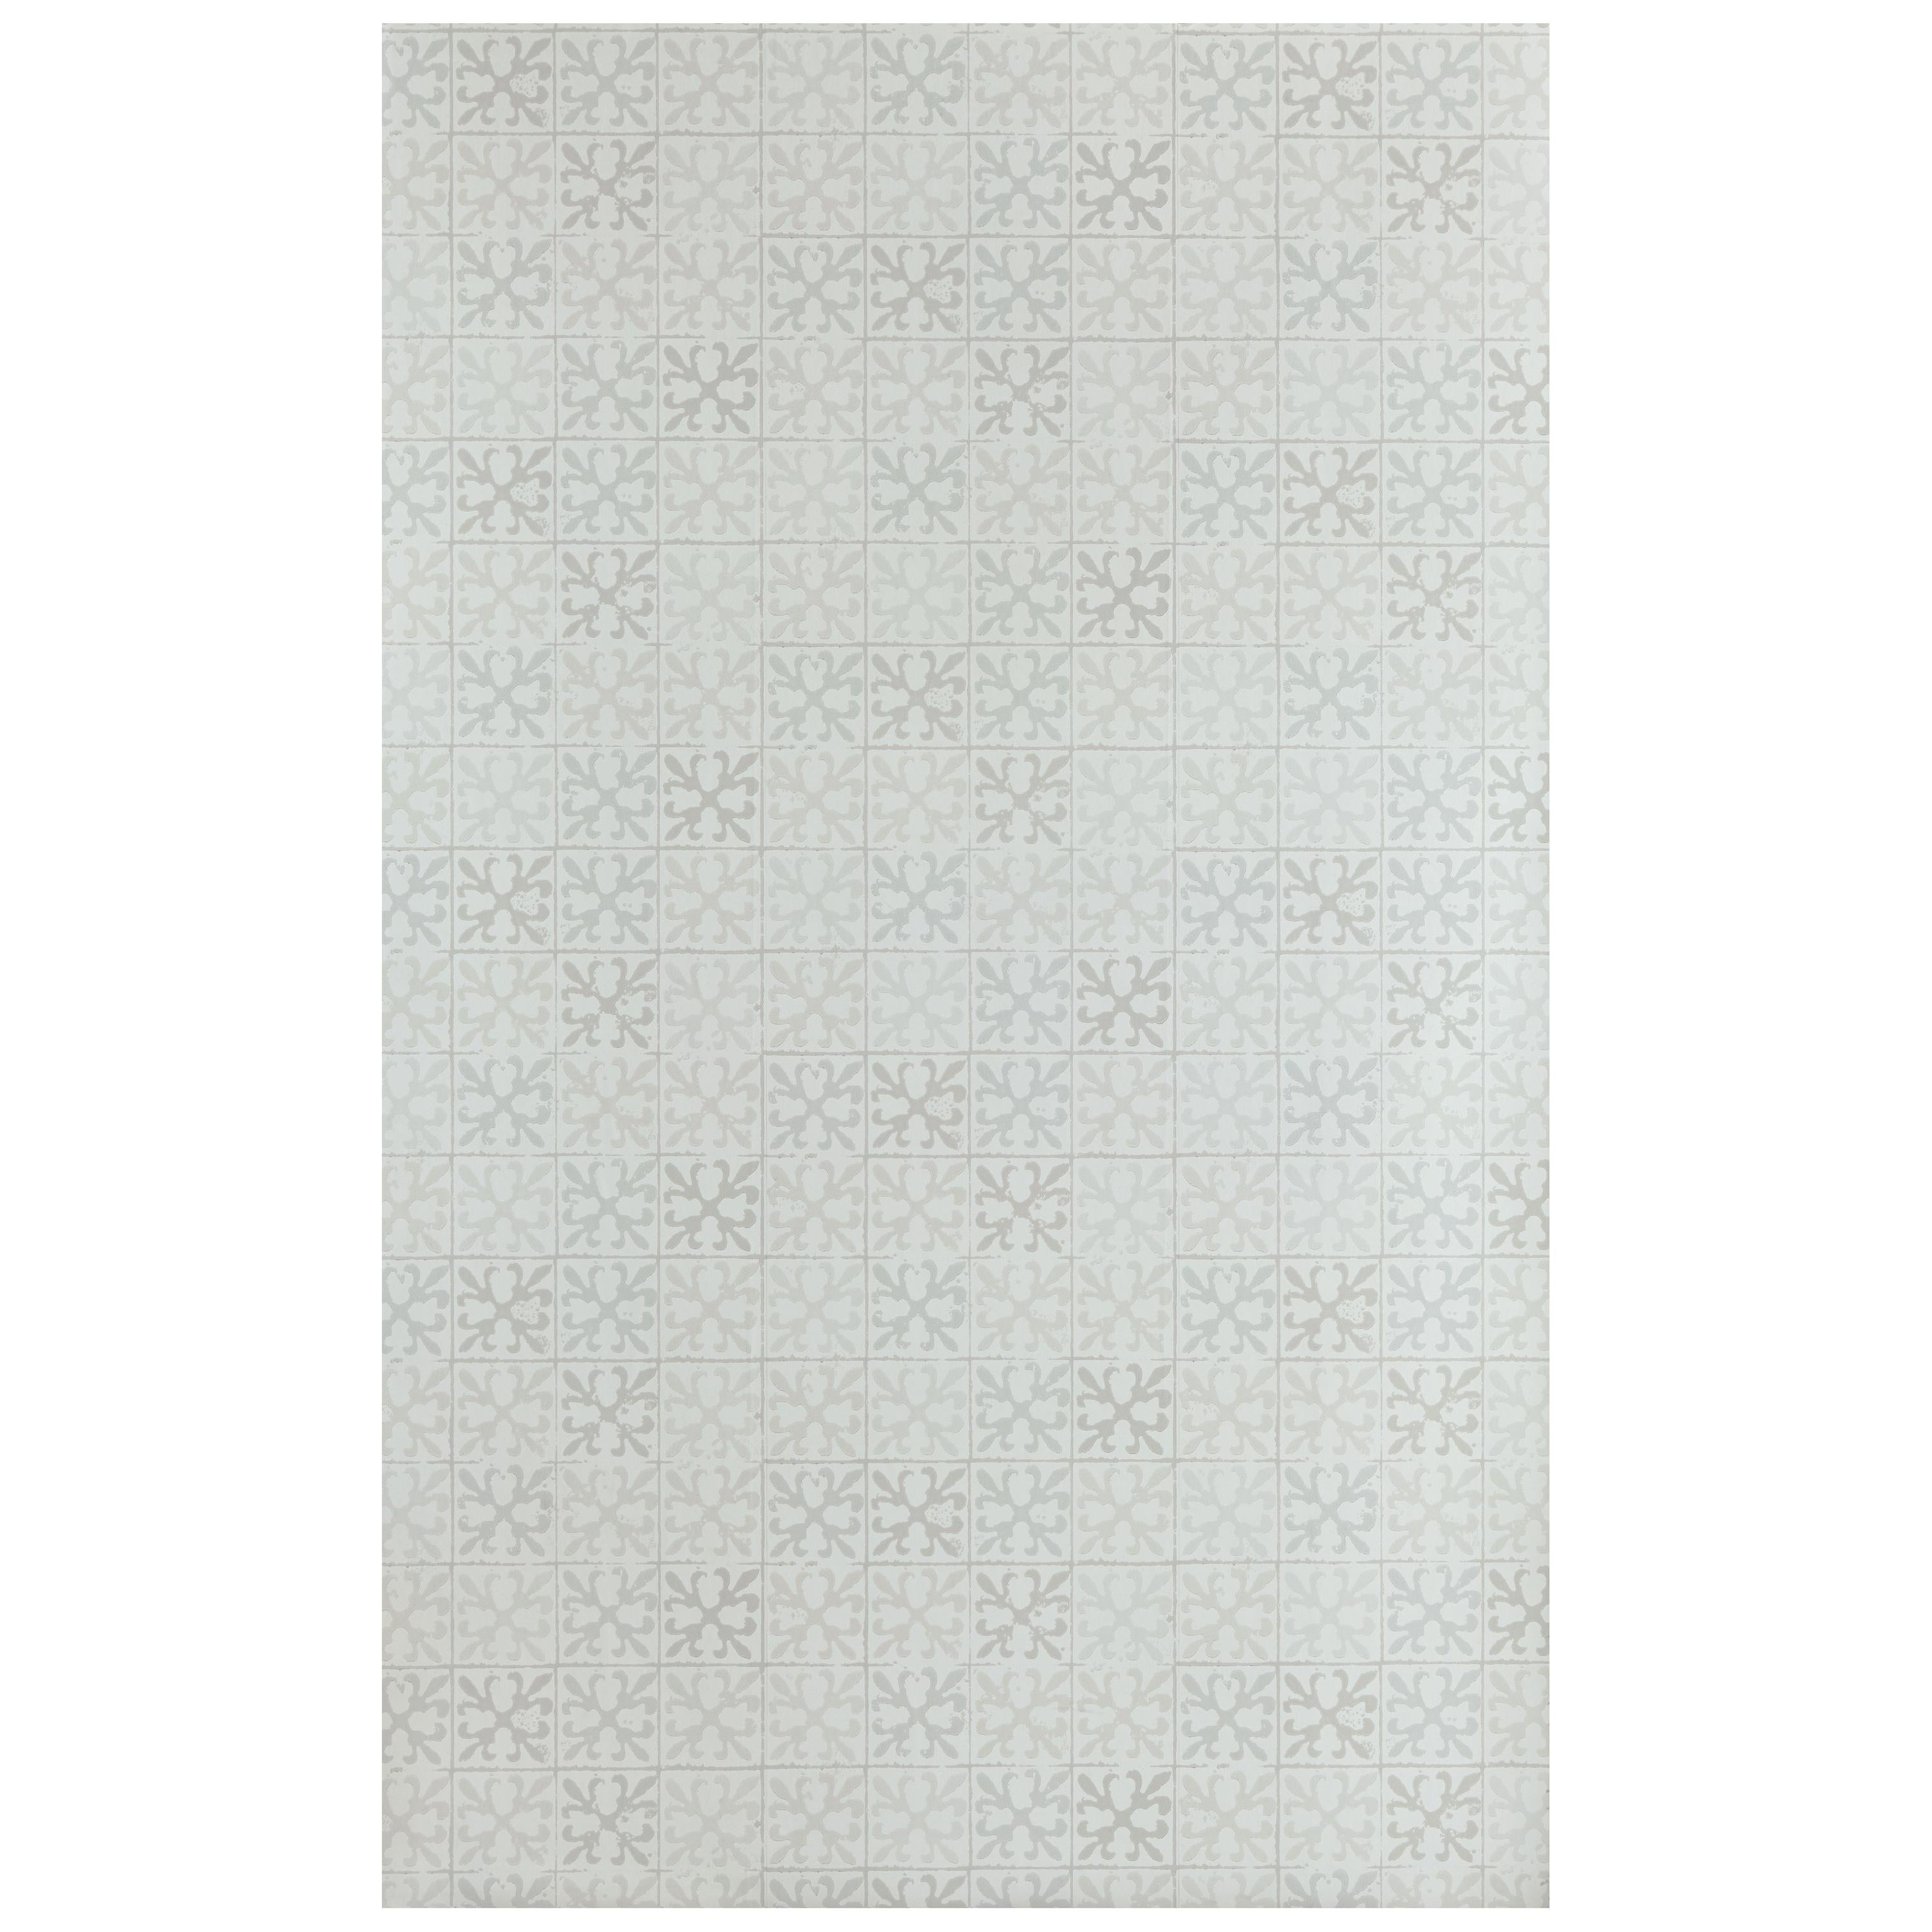 'Fleur de Lys Tile' Contemporary, Traditional Wallpaper in Vintage Grey For Sale